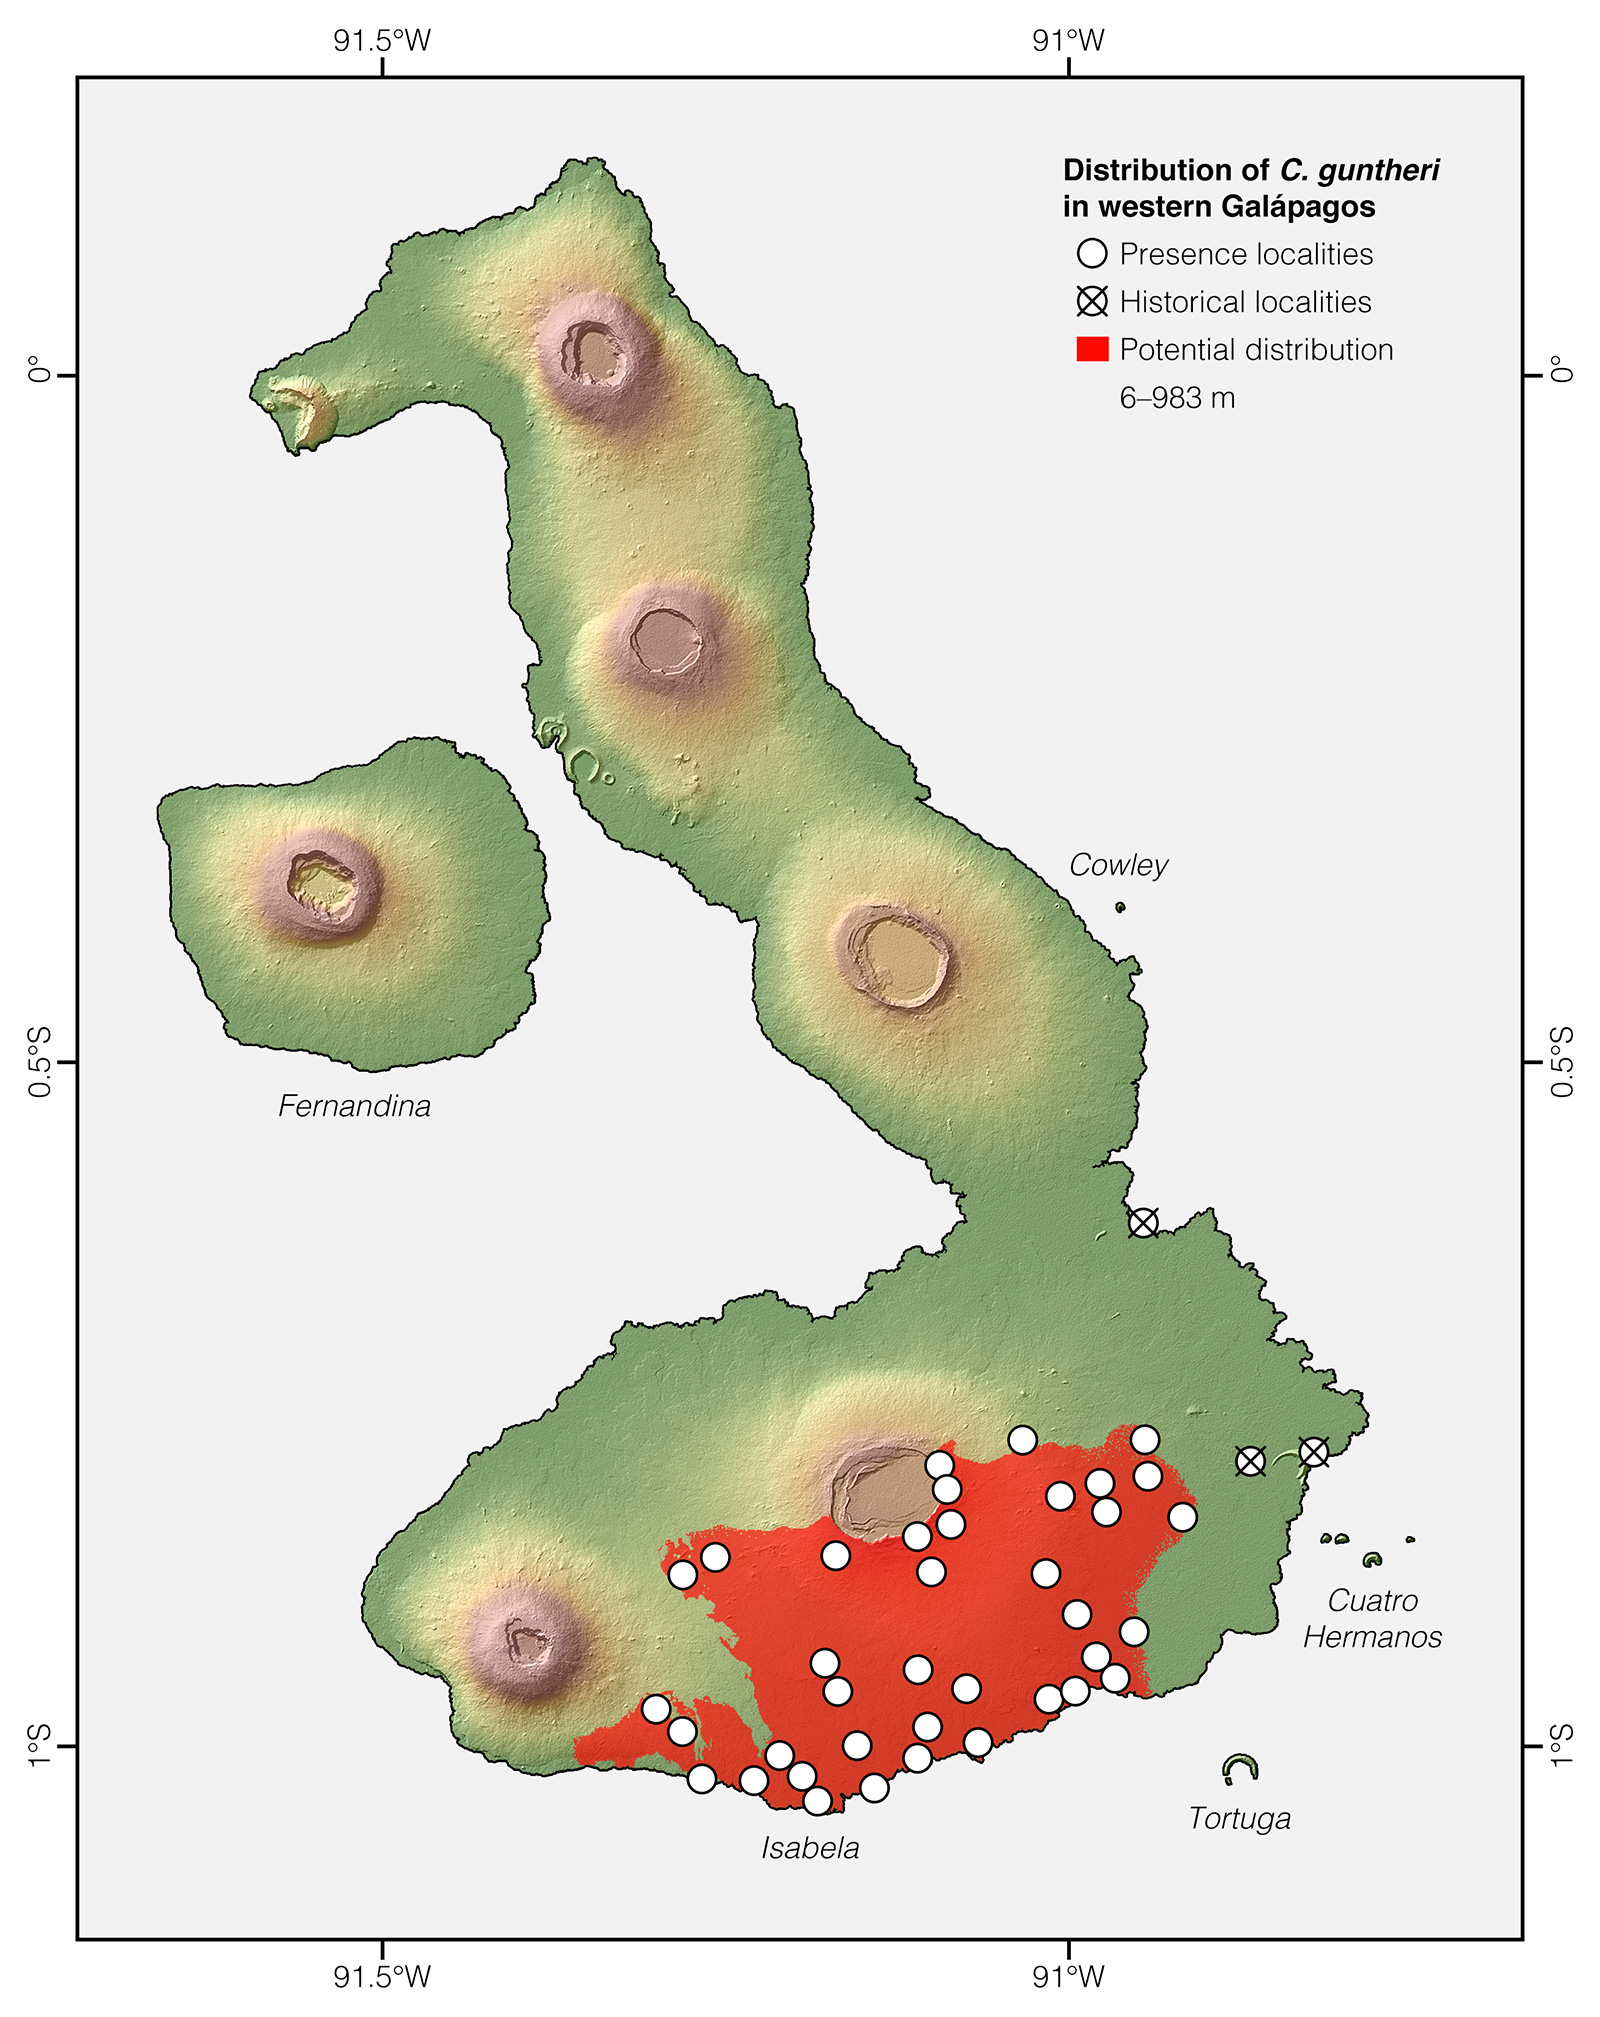 Distribution of Chelonoidis guntheri in western Galápagos